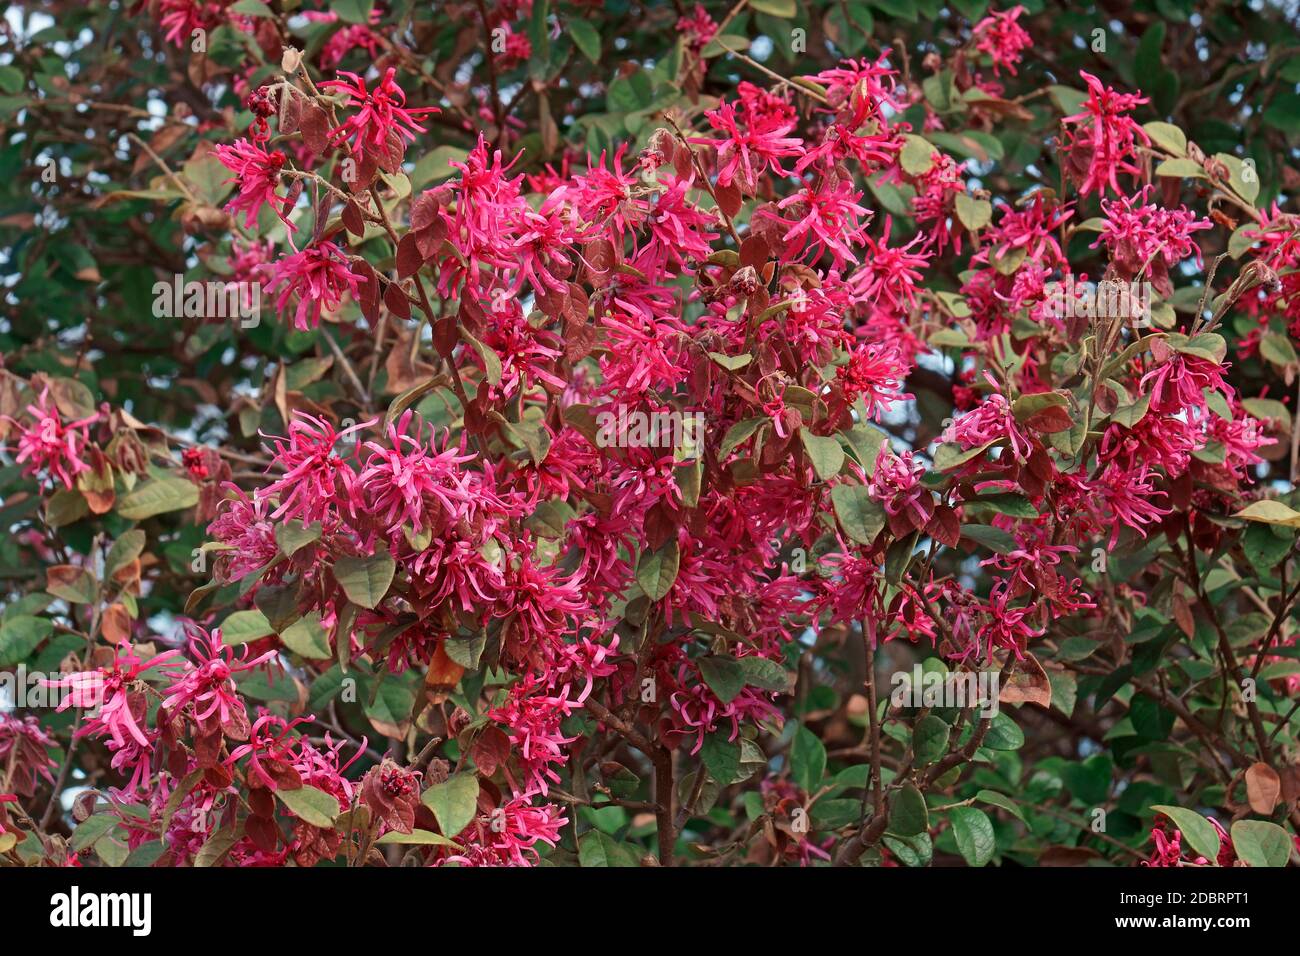 Redleaf loropetalum (Loropetalum chinense var. rubrum). Stock Photo